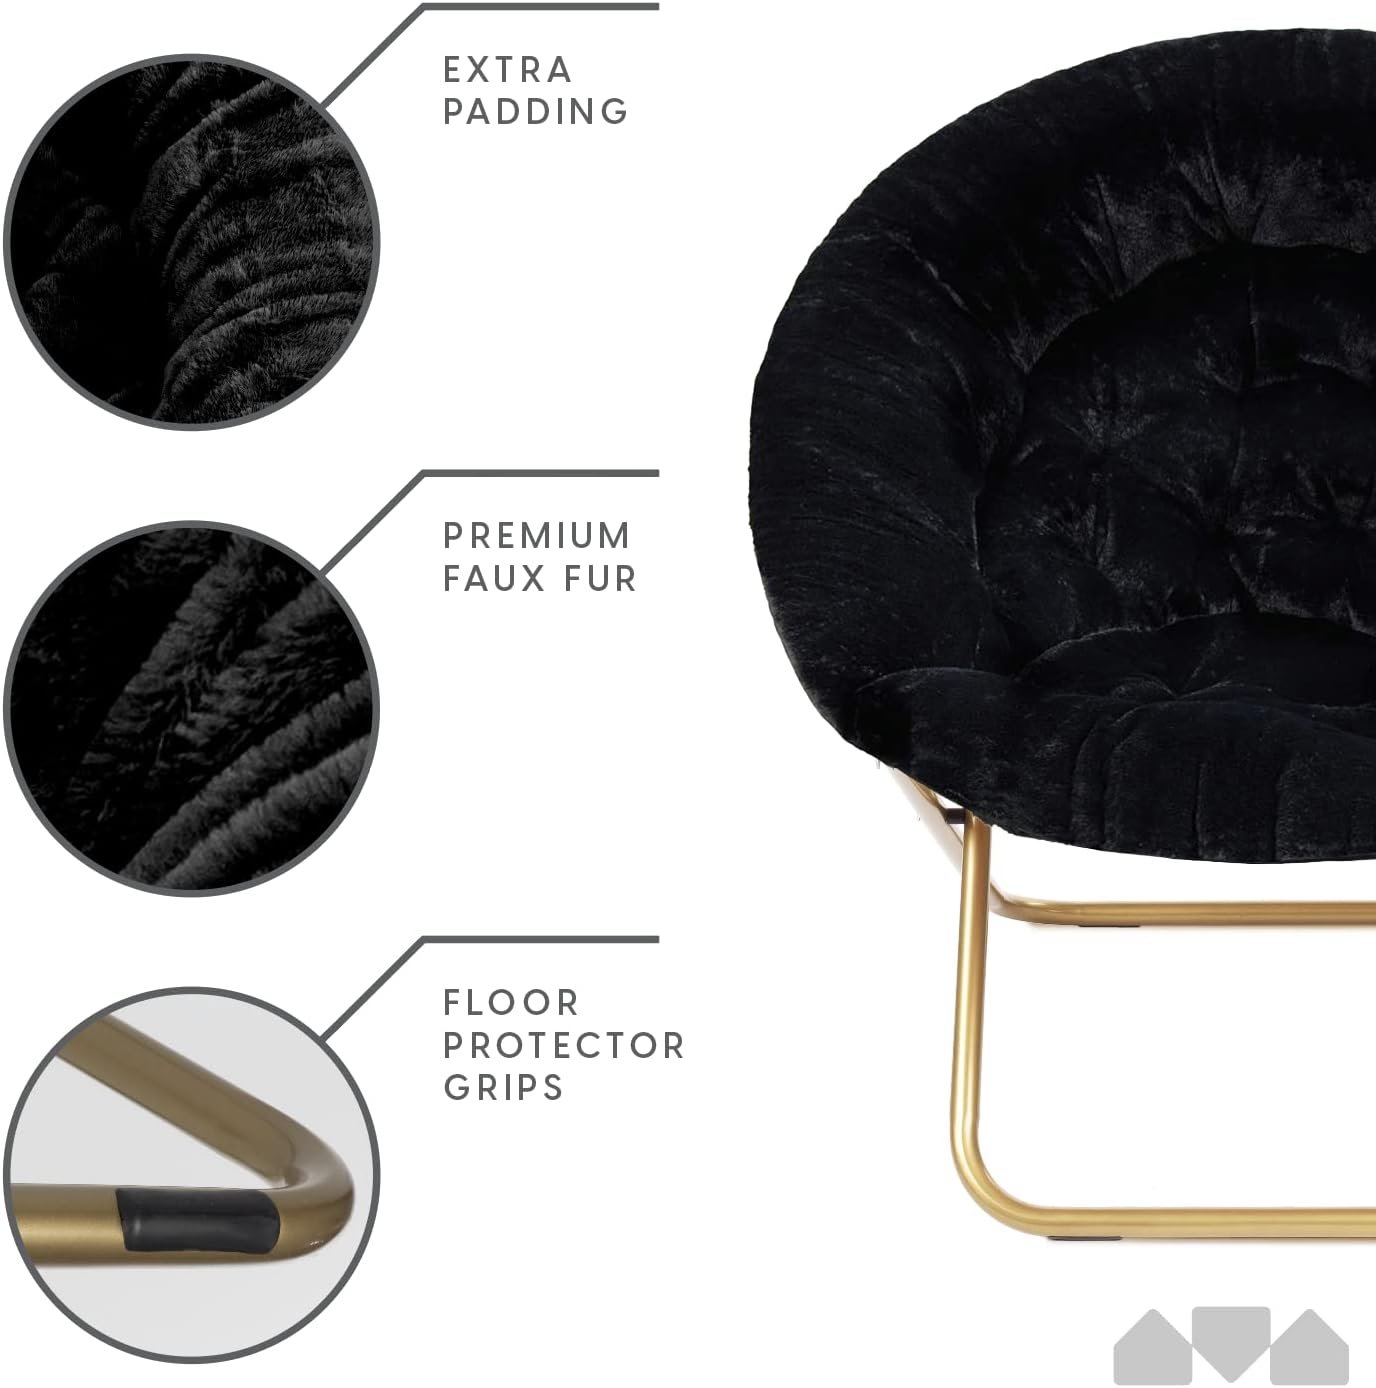 Milliard Cozy Chair/Faux Fur Saucer Chair Review